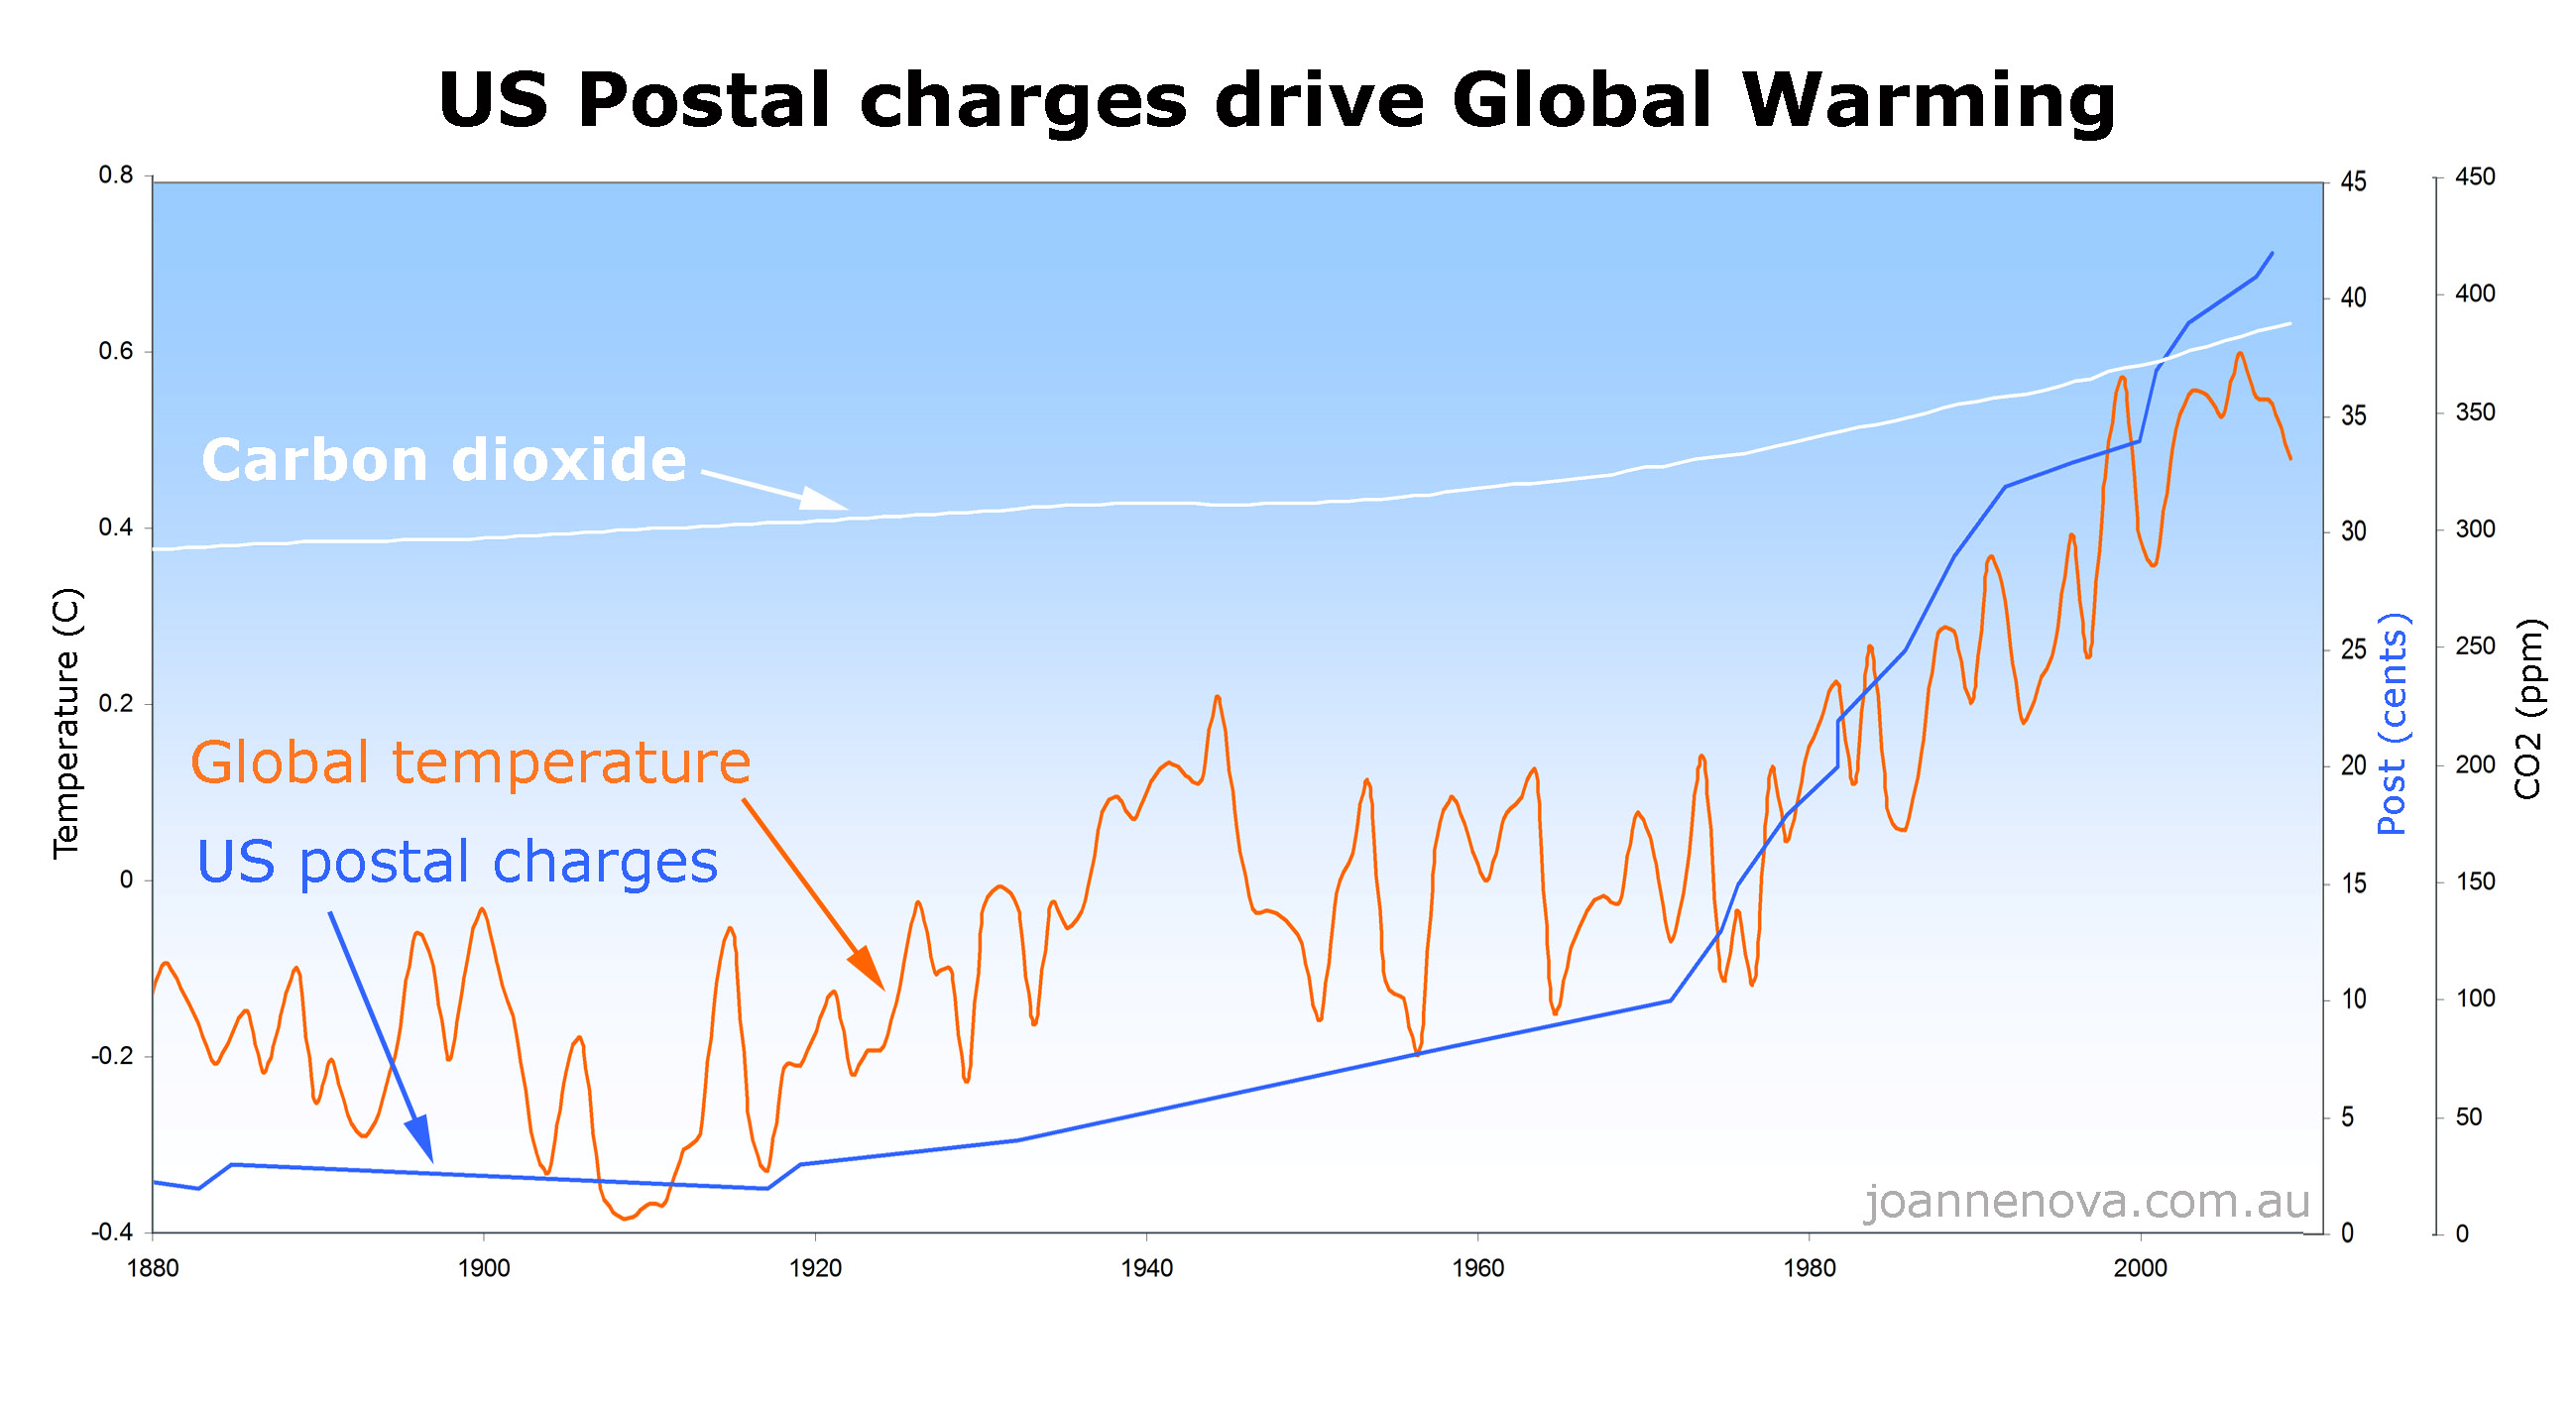 US postal rates drive global warming